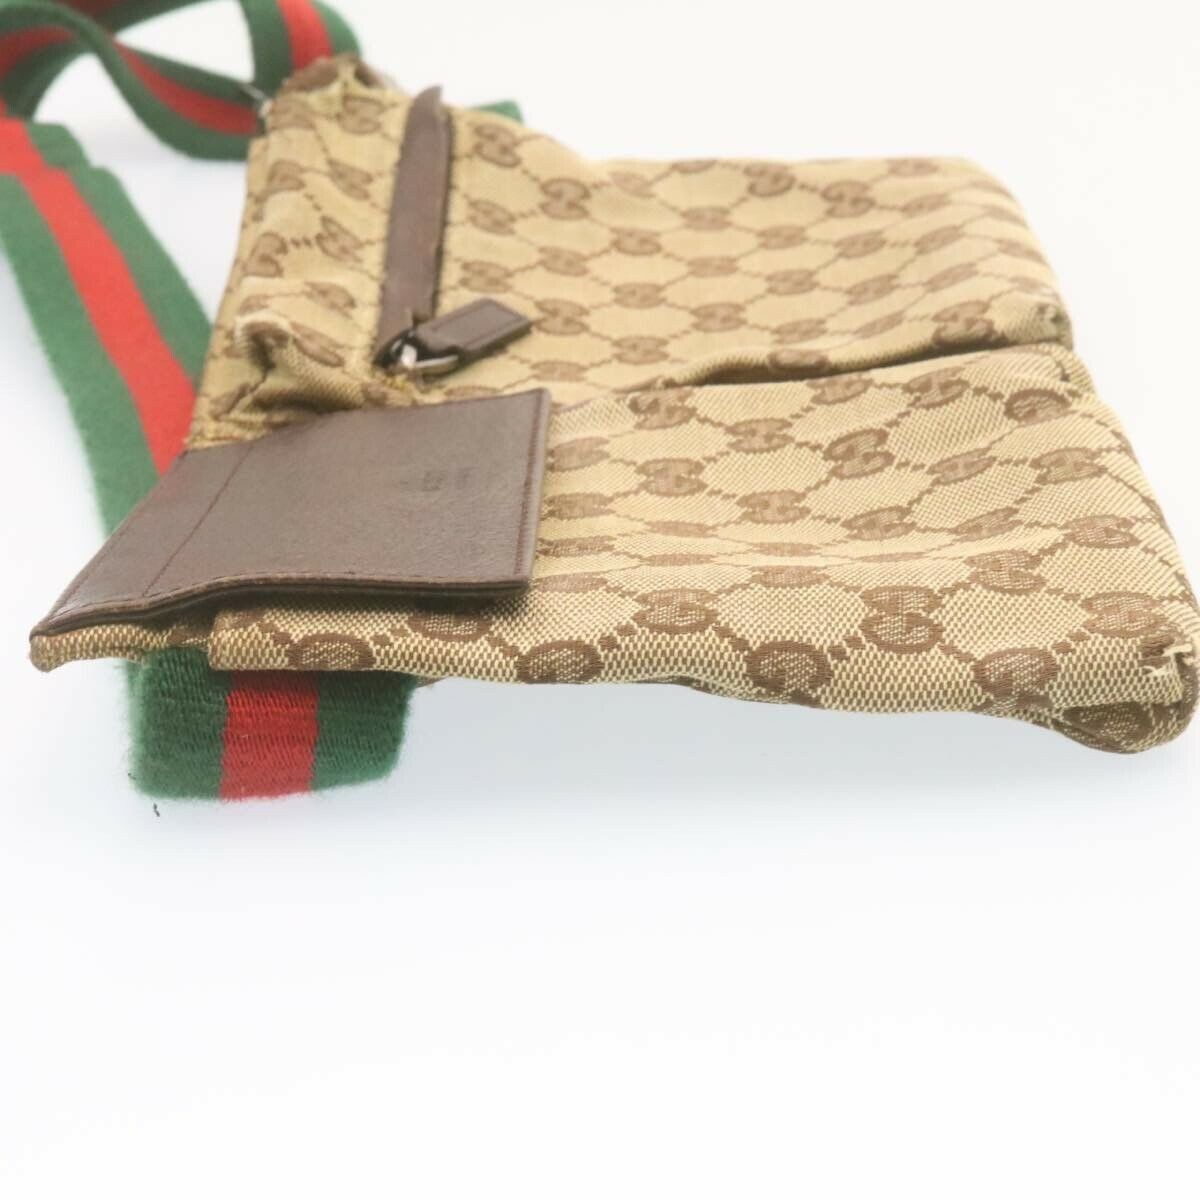 Gucci Monogram Crossbody Bag Size ONE SIZE - 4 Thumbnail